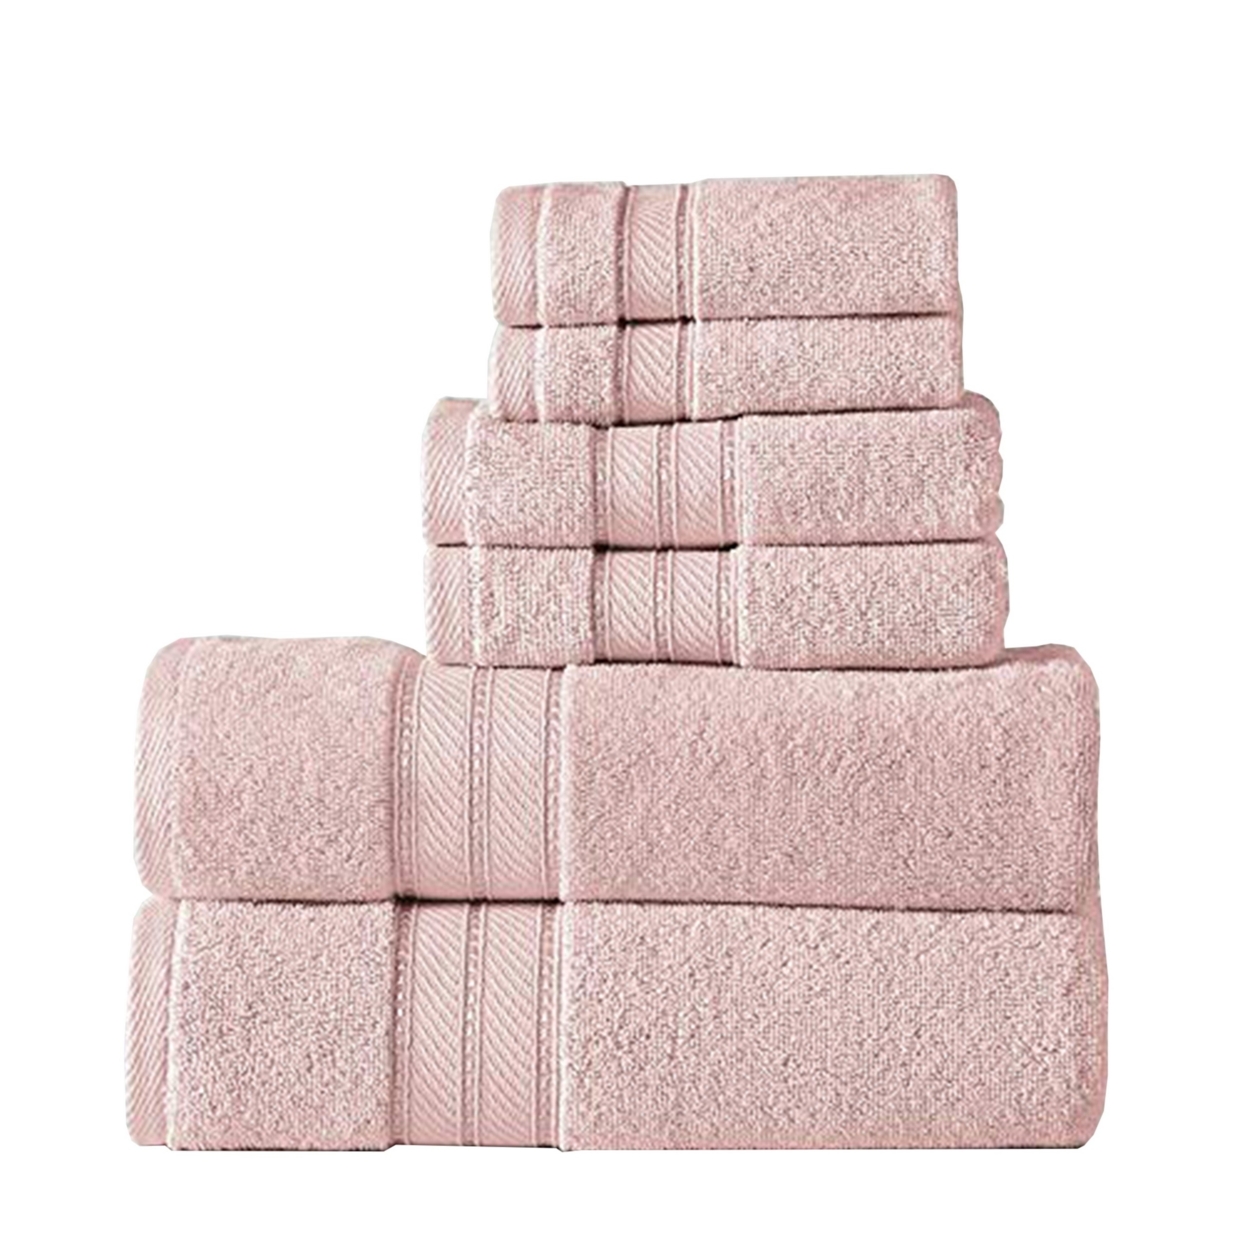 Bergamo 6 Piece Spun Loft Towel Set With Twill Weaving The Urban Port, Pink- Saltoro Sherpi